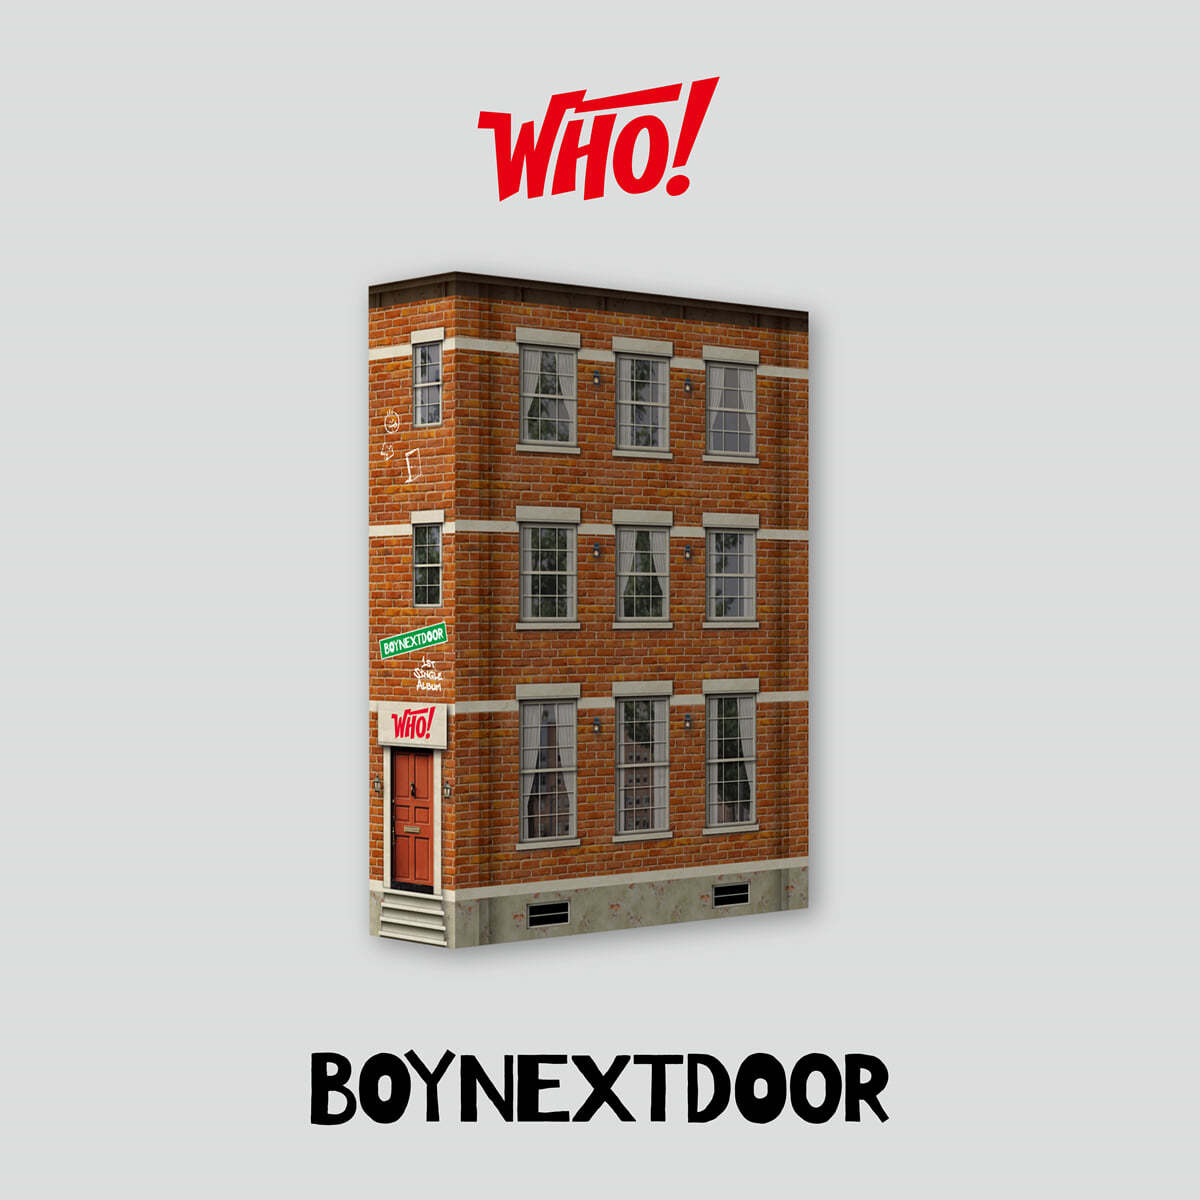 BOYNEXTDOOR (보이넥스트도어) - 1st Single ‘WHO!’ [WHO ver.]